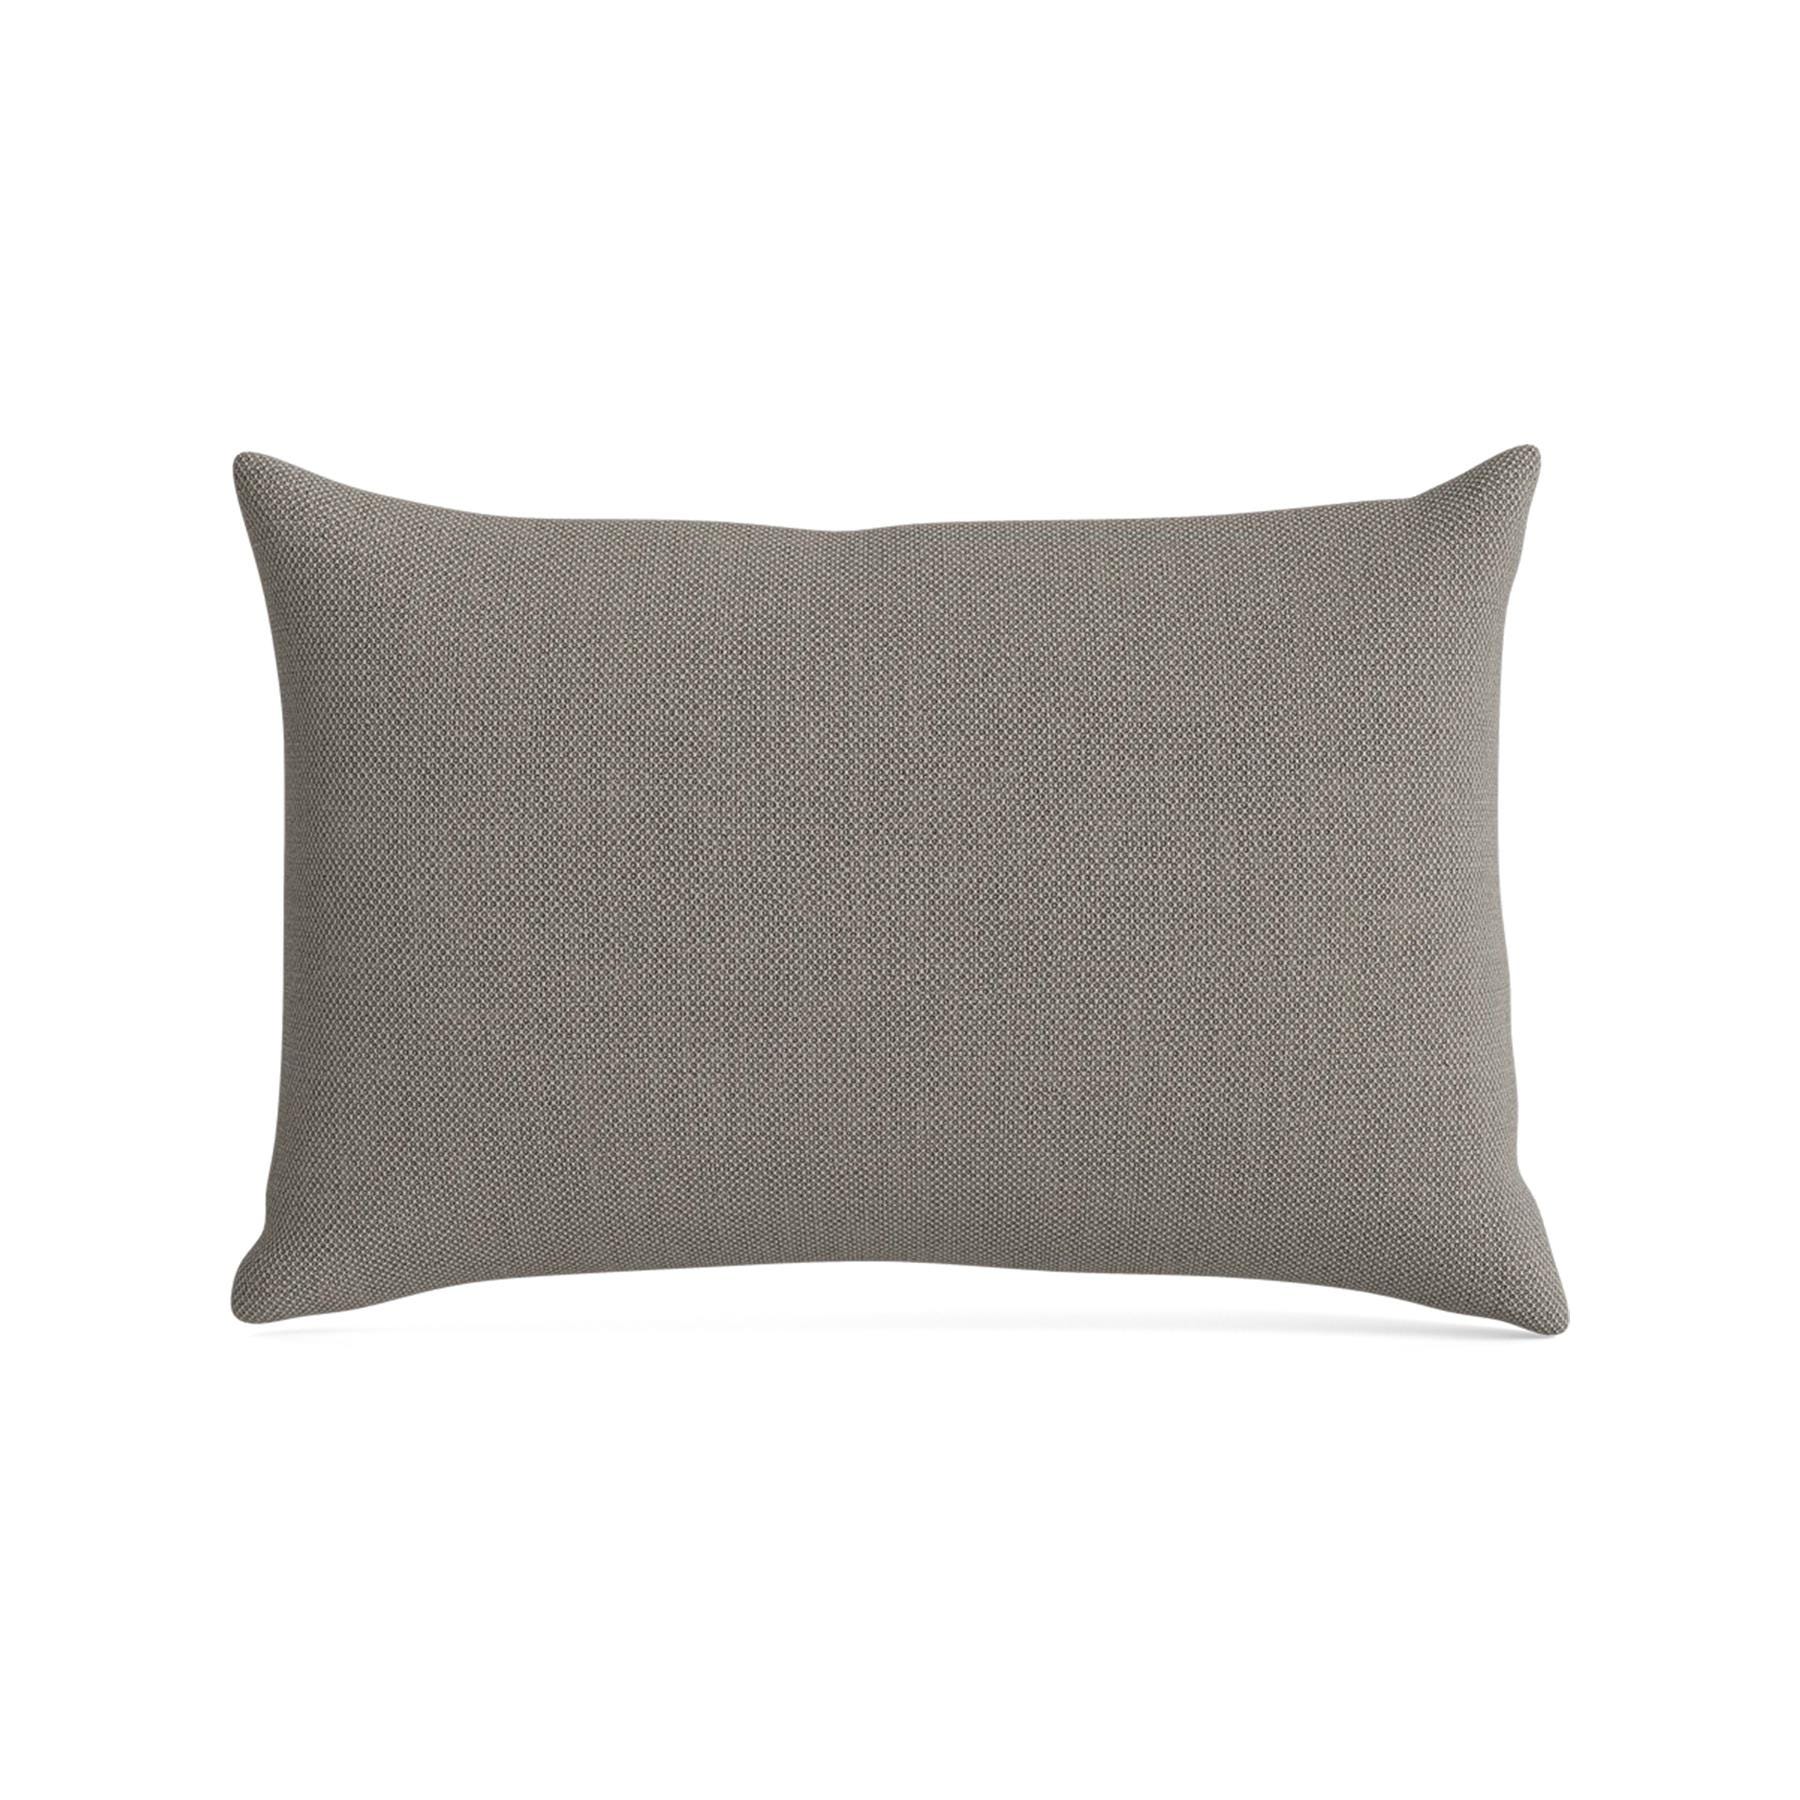 Make Nordic Pillow 40cmx60cm Fiord 262 Down And Fibers Brown